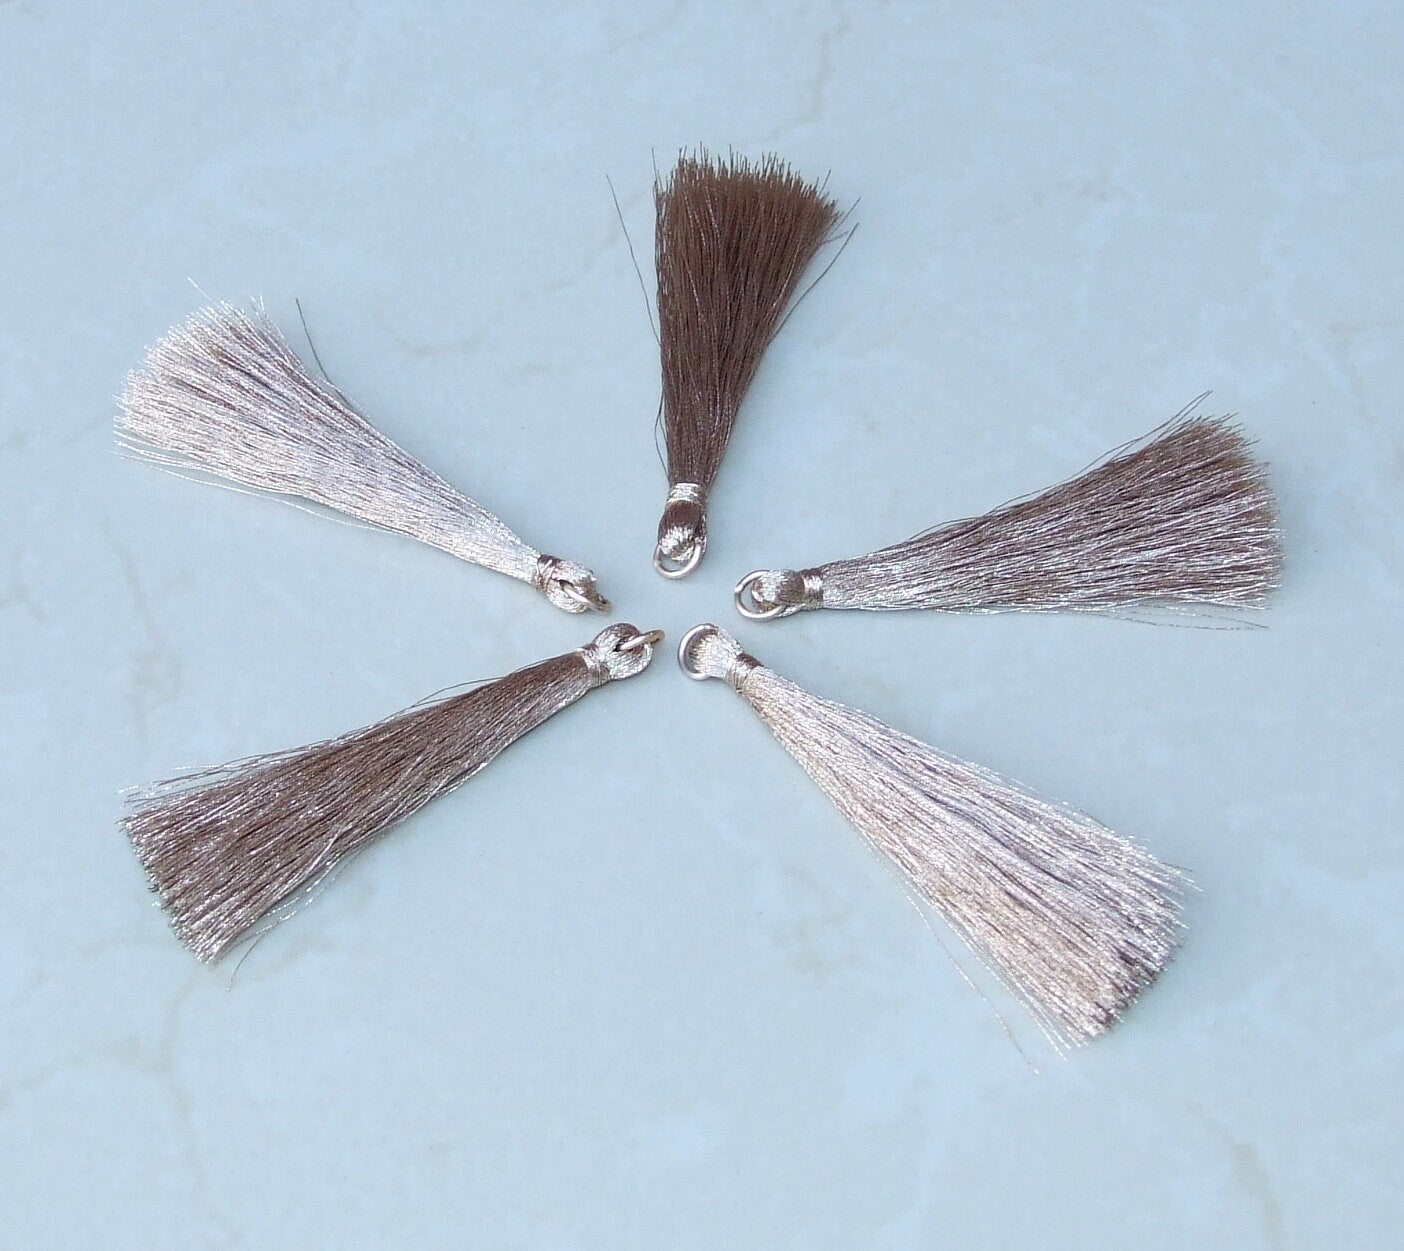 Bronze Metallic Thread Tassel, Hand Made in the USA, 8mm Jump Ring, Embroidery Thread, Tassel Pendant - 3 inch Tassel